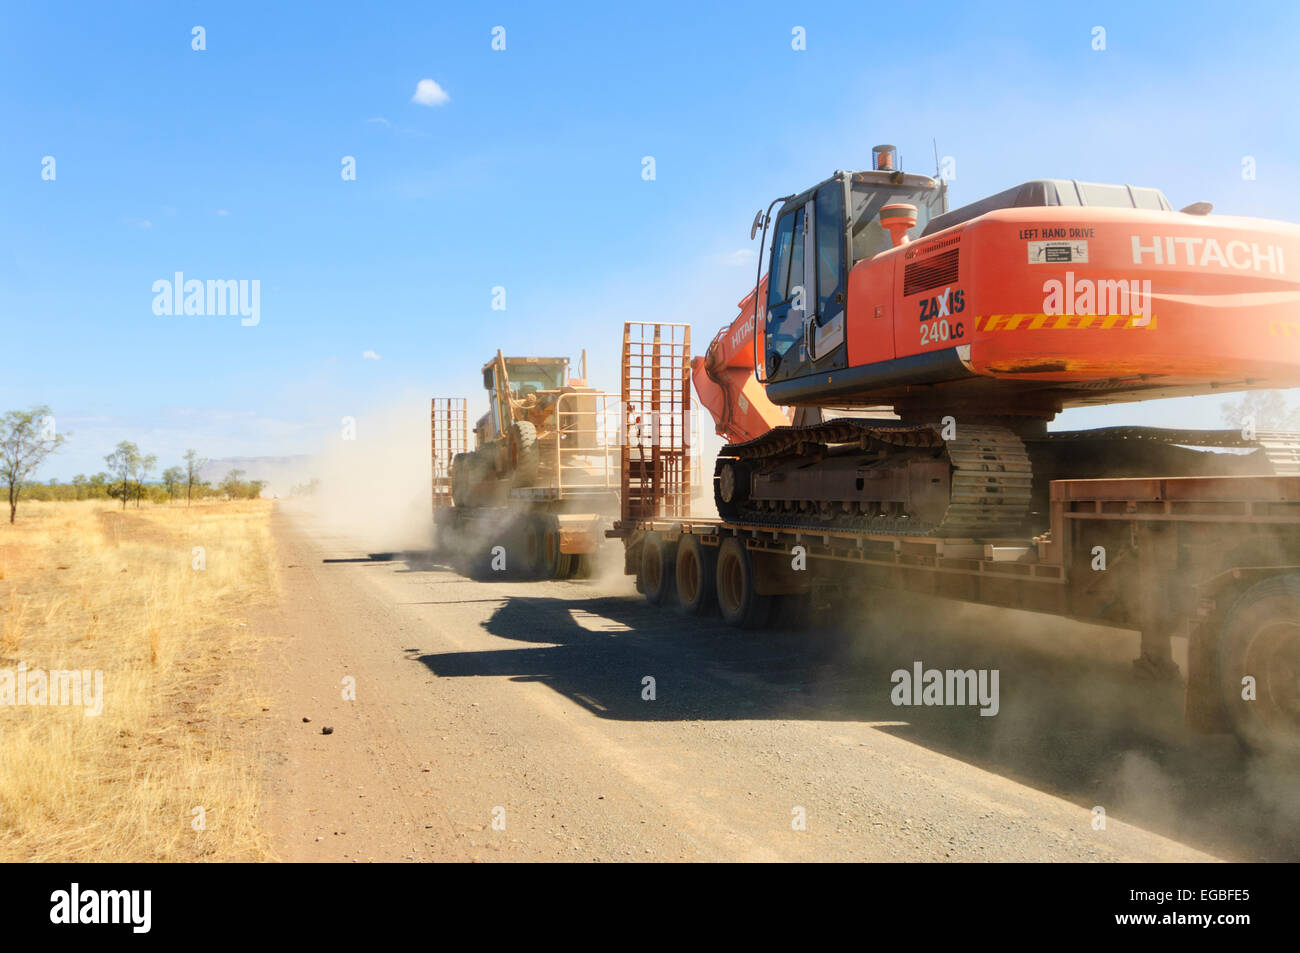 Hitachi Zaxis 240LC Excavator being transported on an Outback road, Kimberley Region, Western Australia, WA, Australia Stock Photo